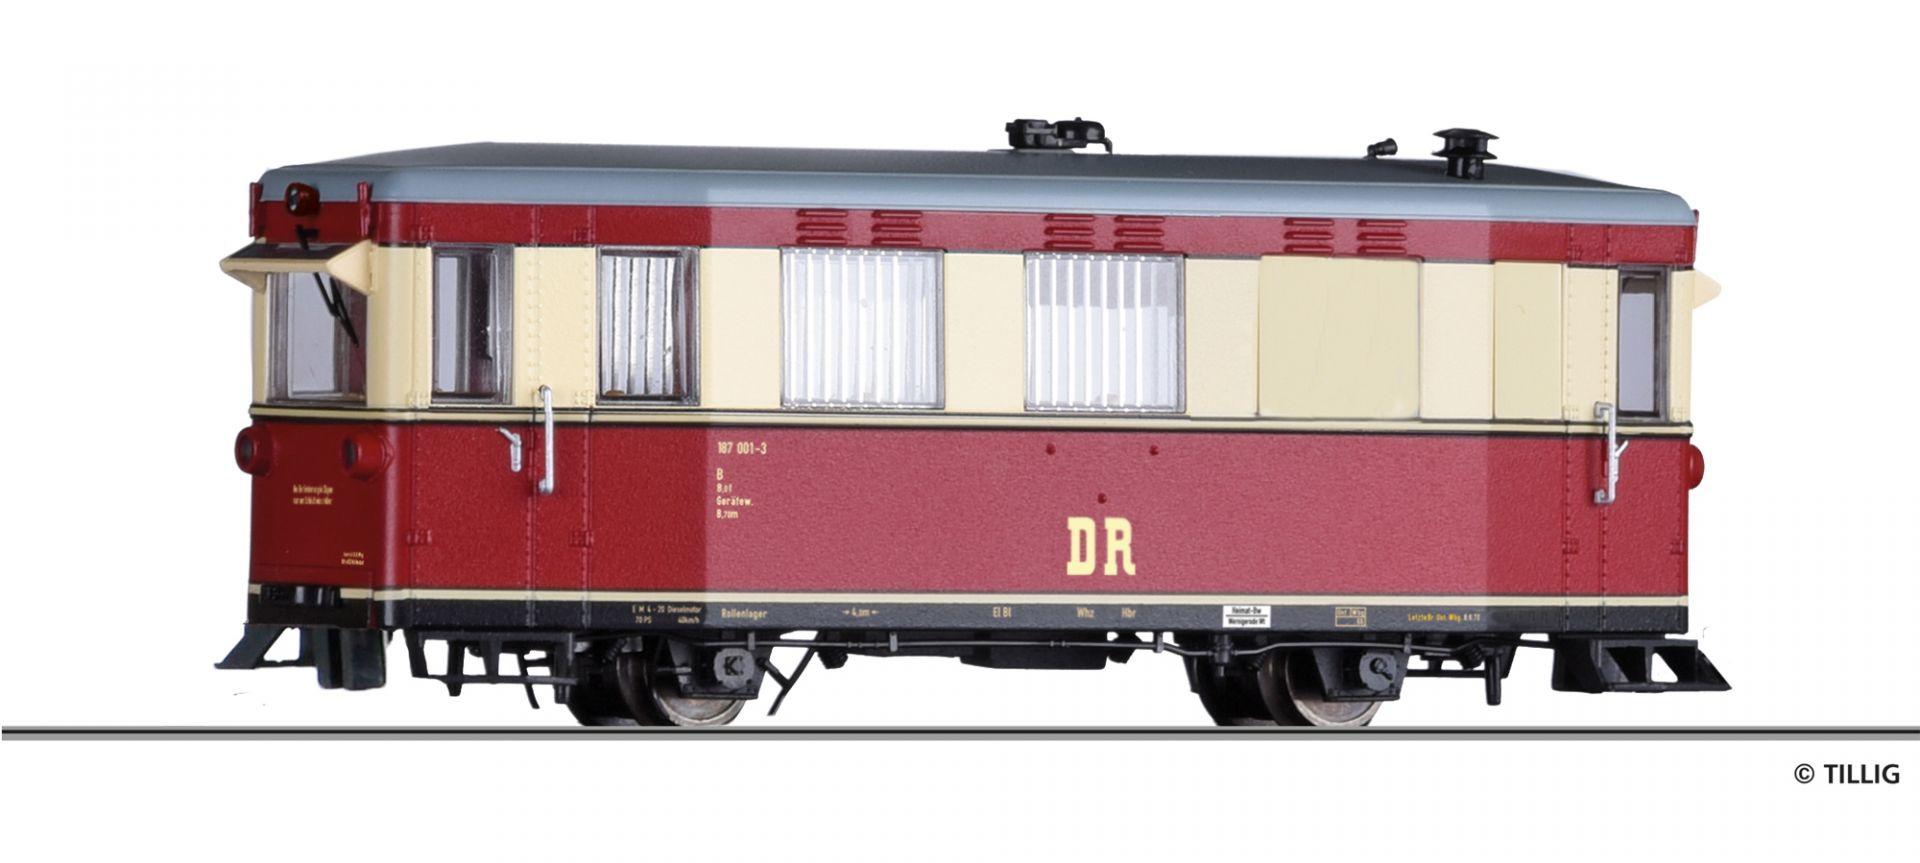 Tillig 02955 Rail car 187 001 3 of the DR  Ep  IV